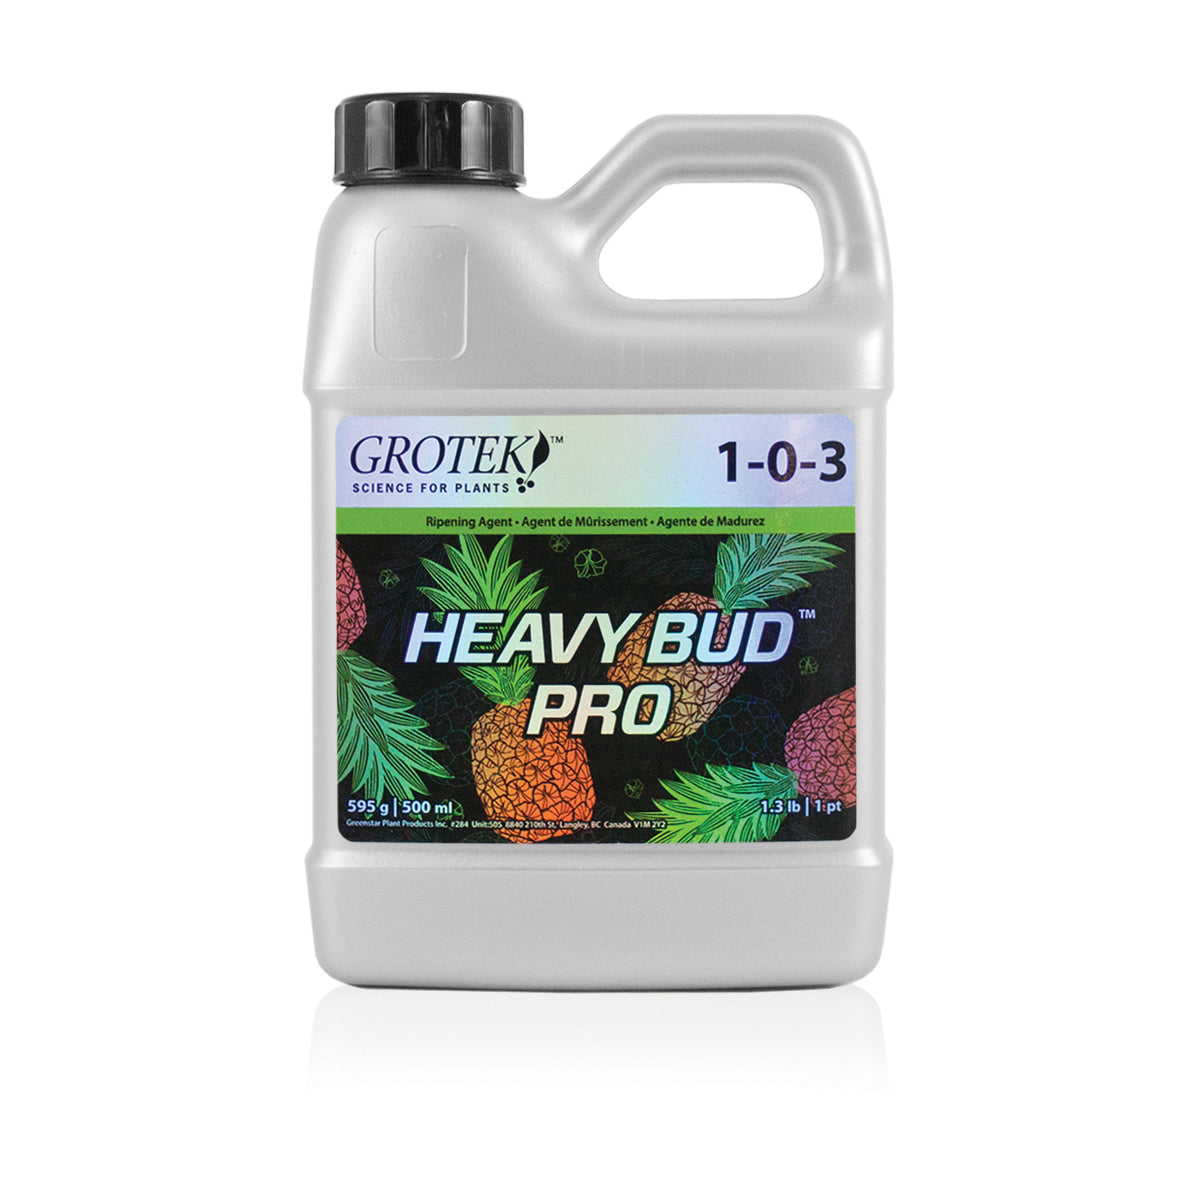 Grotek Heavy Bud Pro (1-0-3) - 500 ml